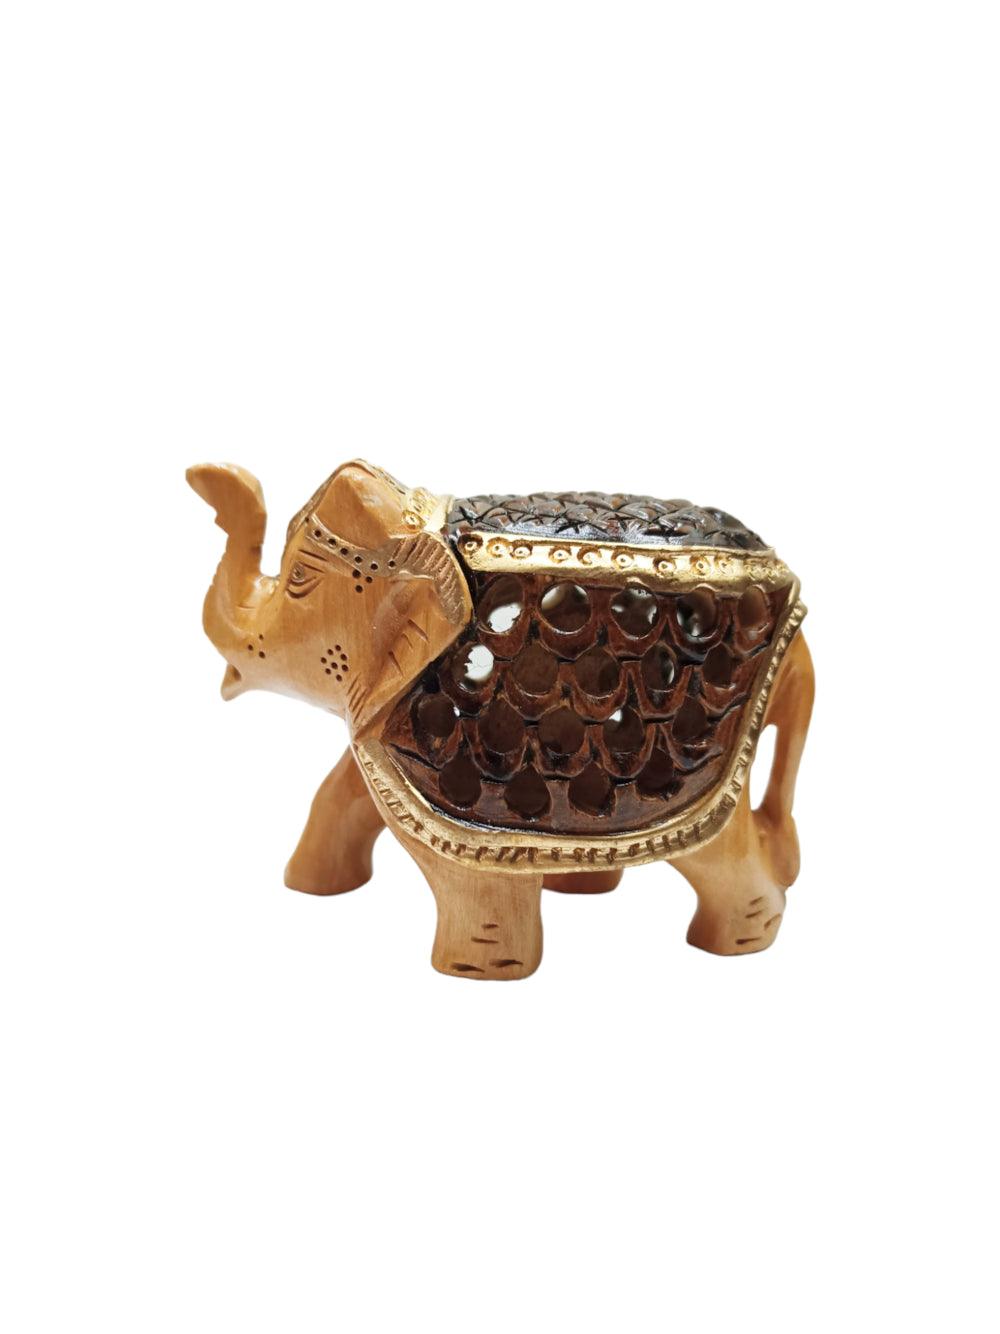 Wooden Elephant | Elephant 4 Piece Set  | Handicrafts